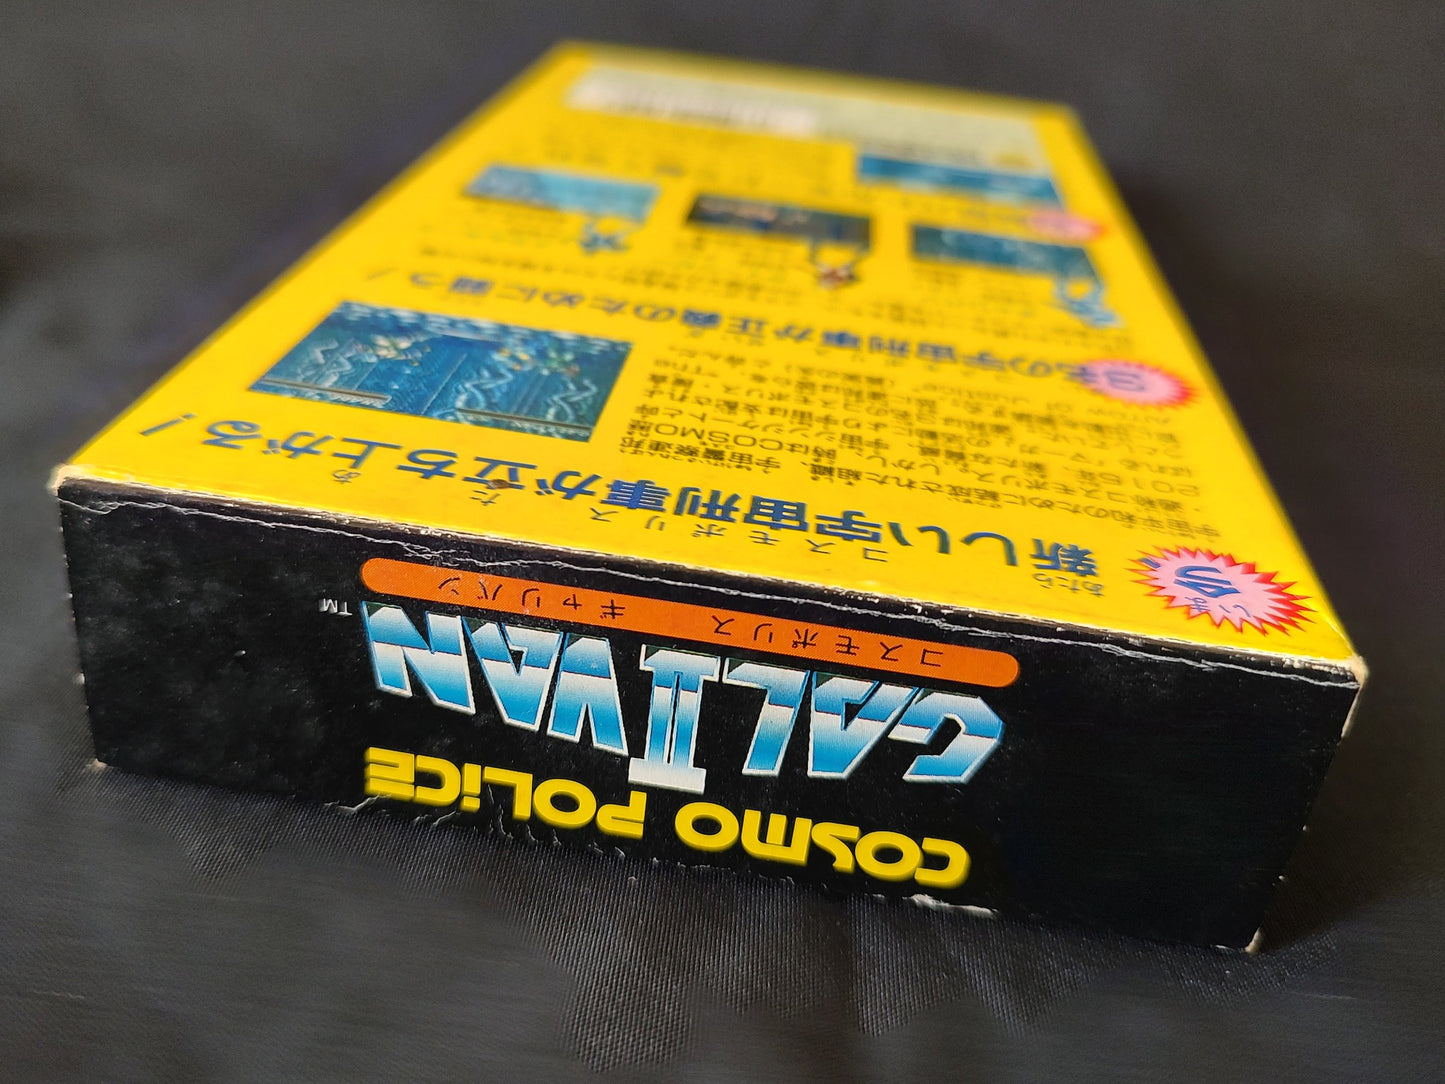 Cosmo Police Galivan Super Famicom SFC Cartridge w/,Manual, Box, Working-f0115-